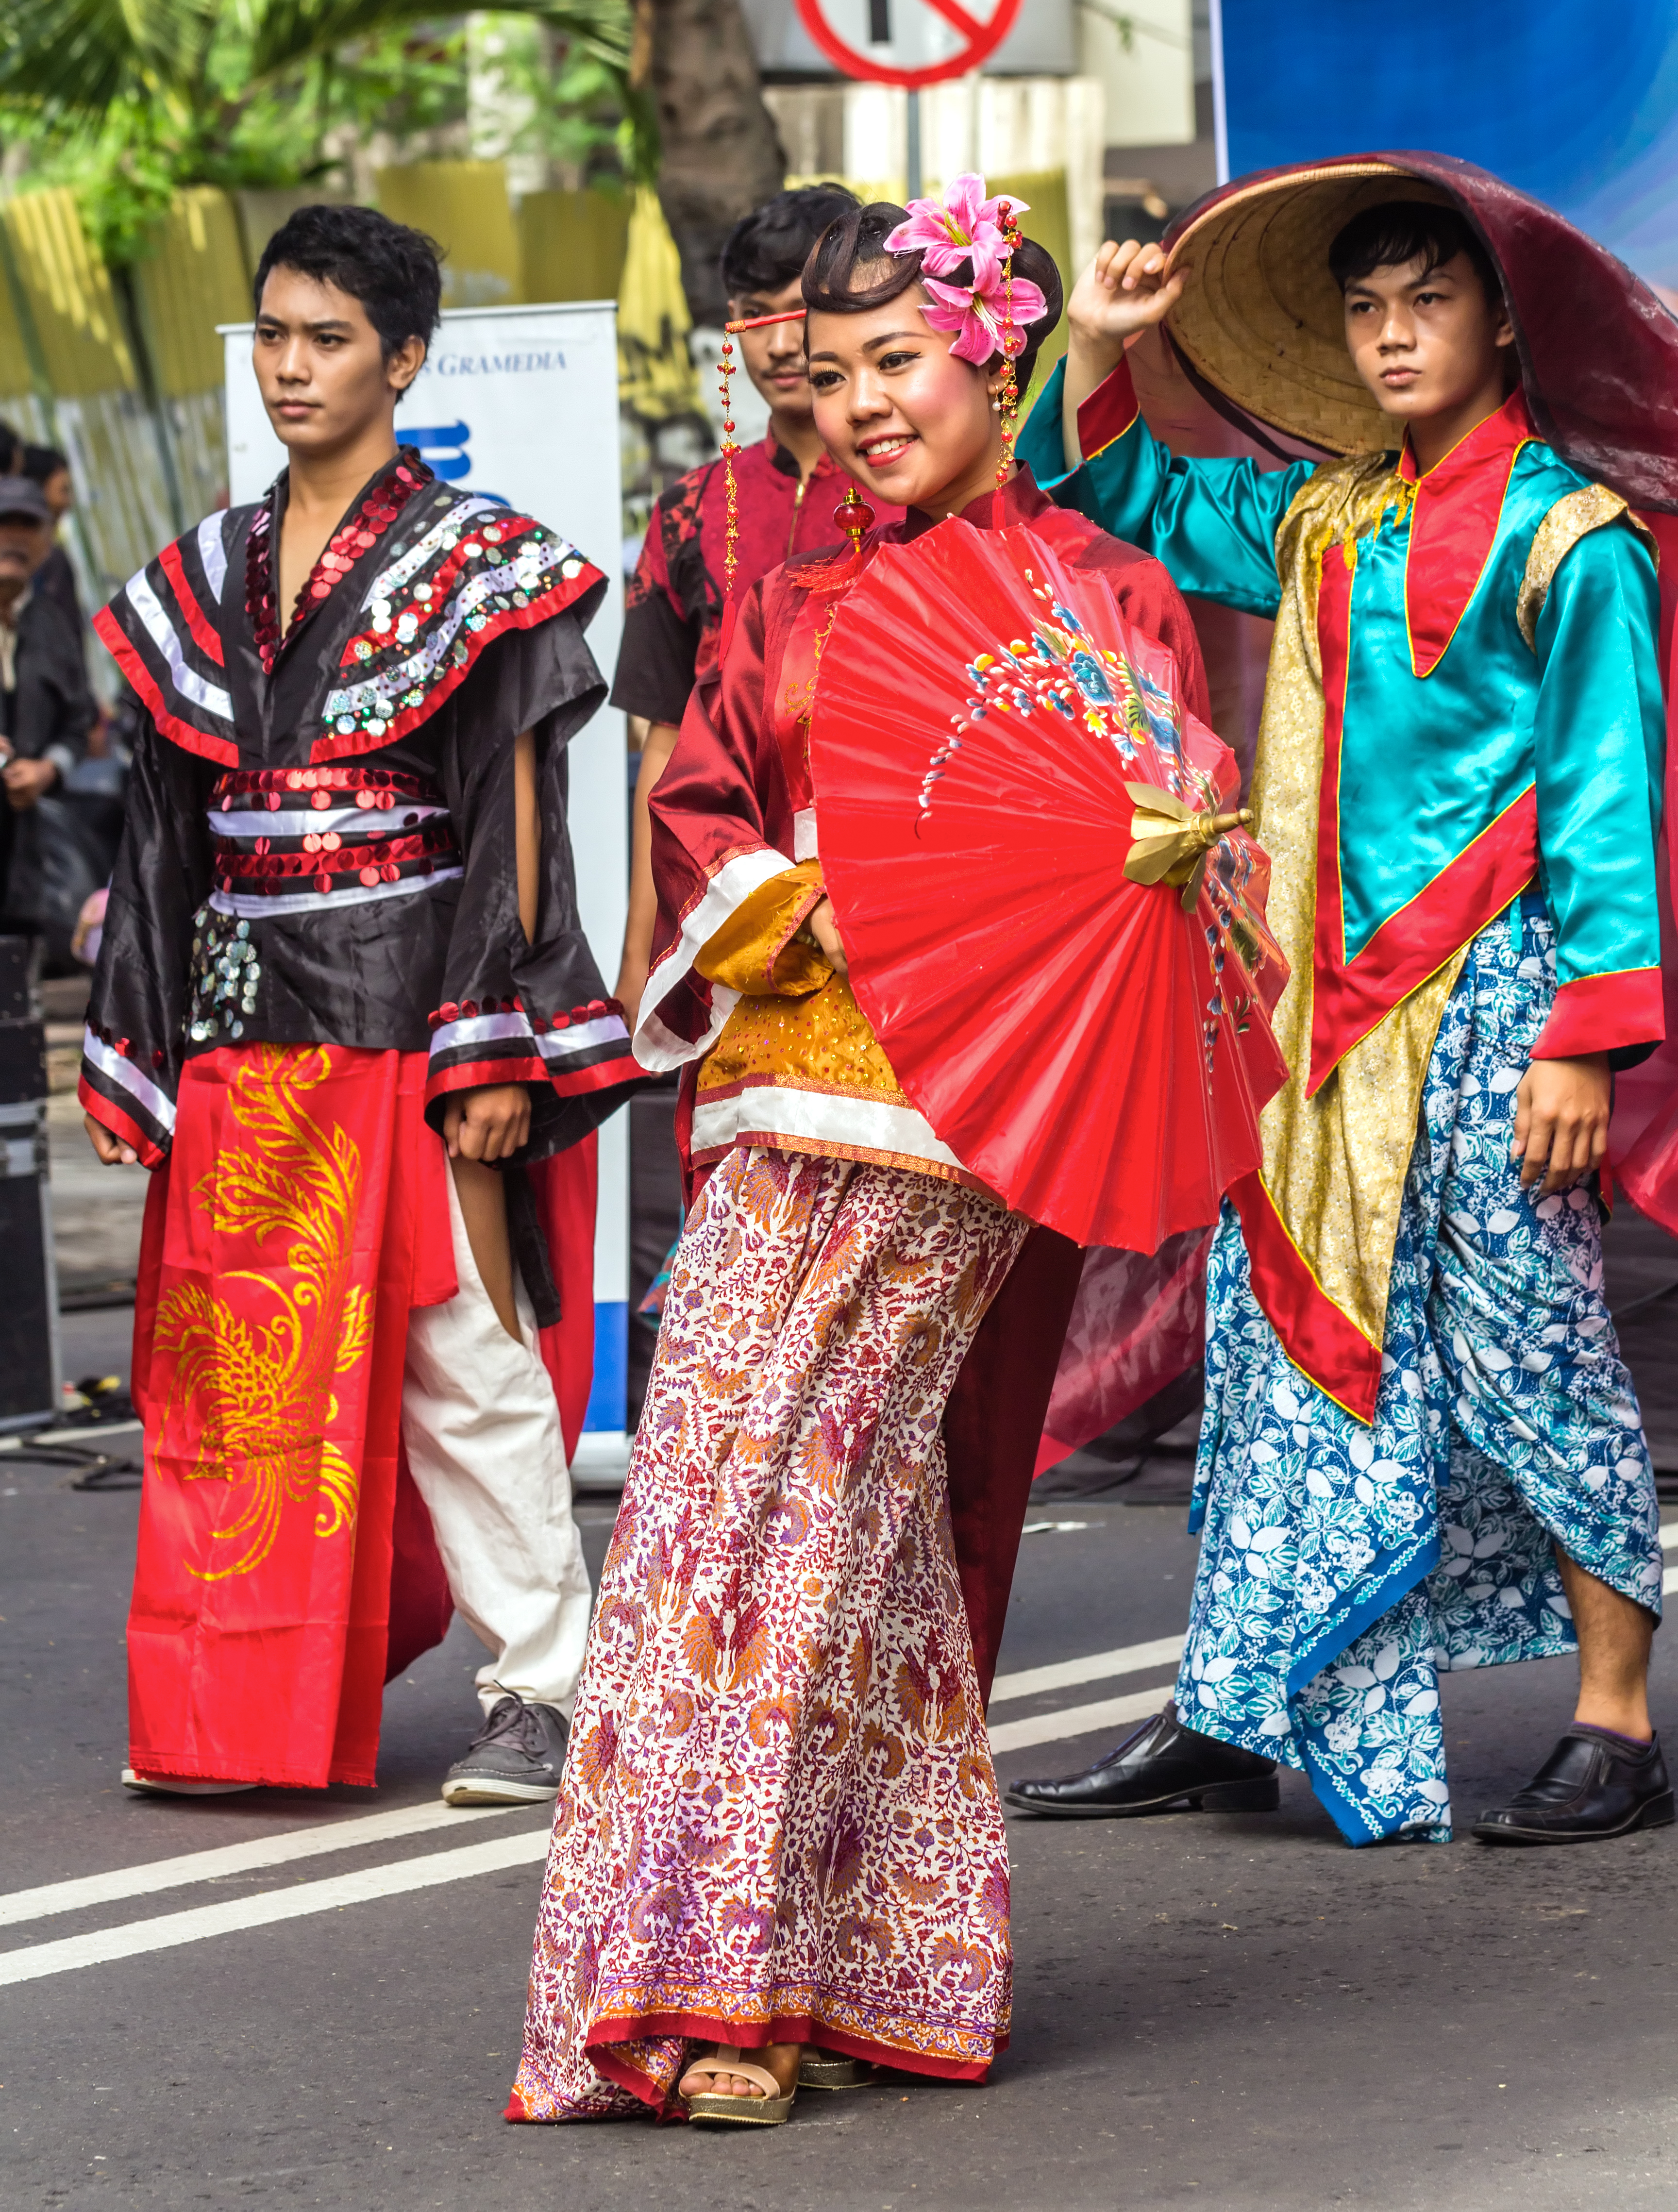 2015 Chinese New Year Fashion Show, Sudirman Street, Yogyakarta, 2015-02-15 03